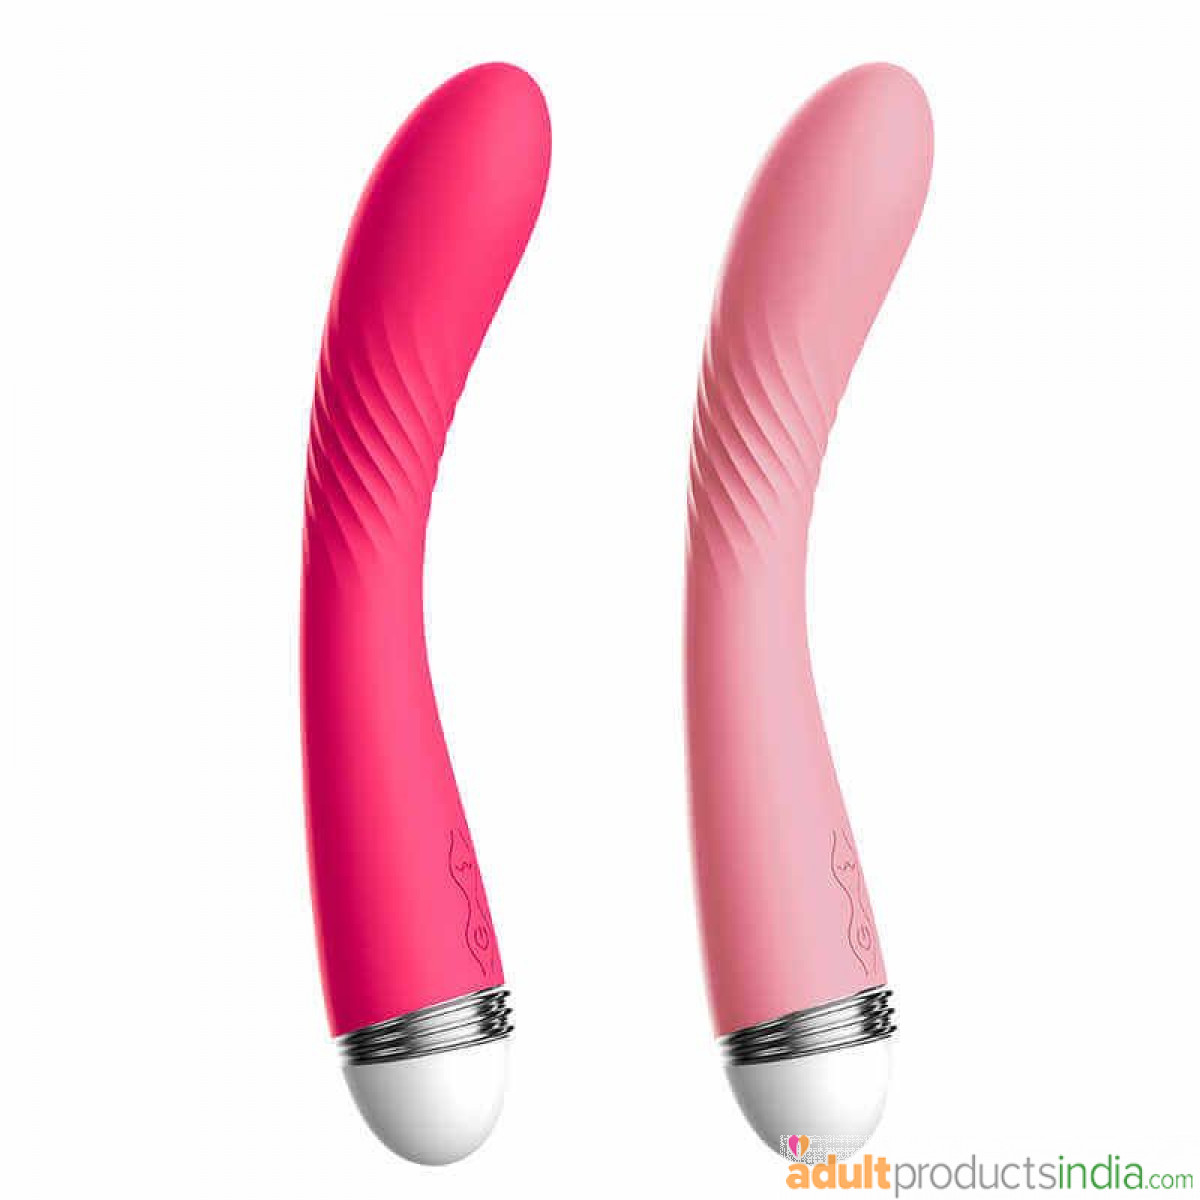 Lilo Perfect Orgasm Vibrator Sex Toy For Women